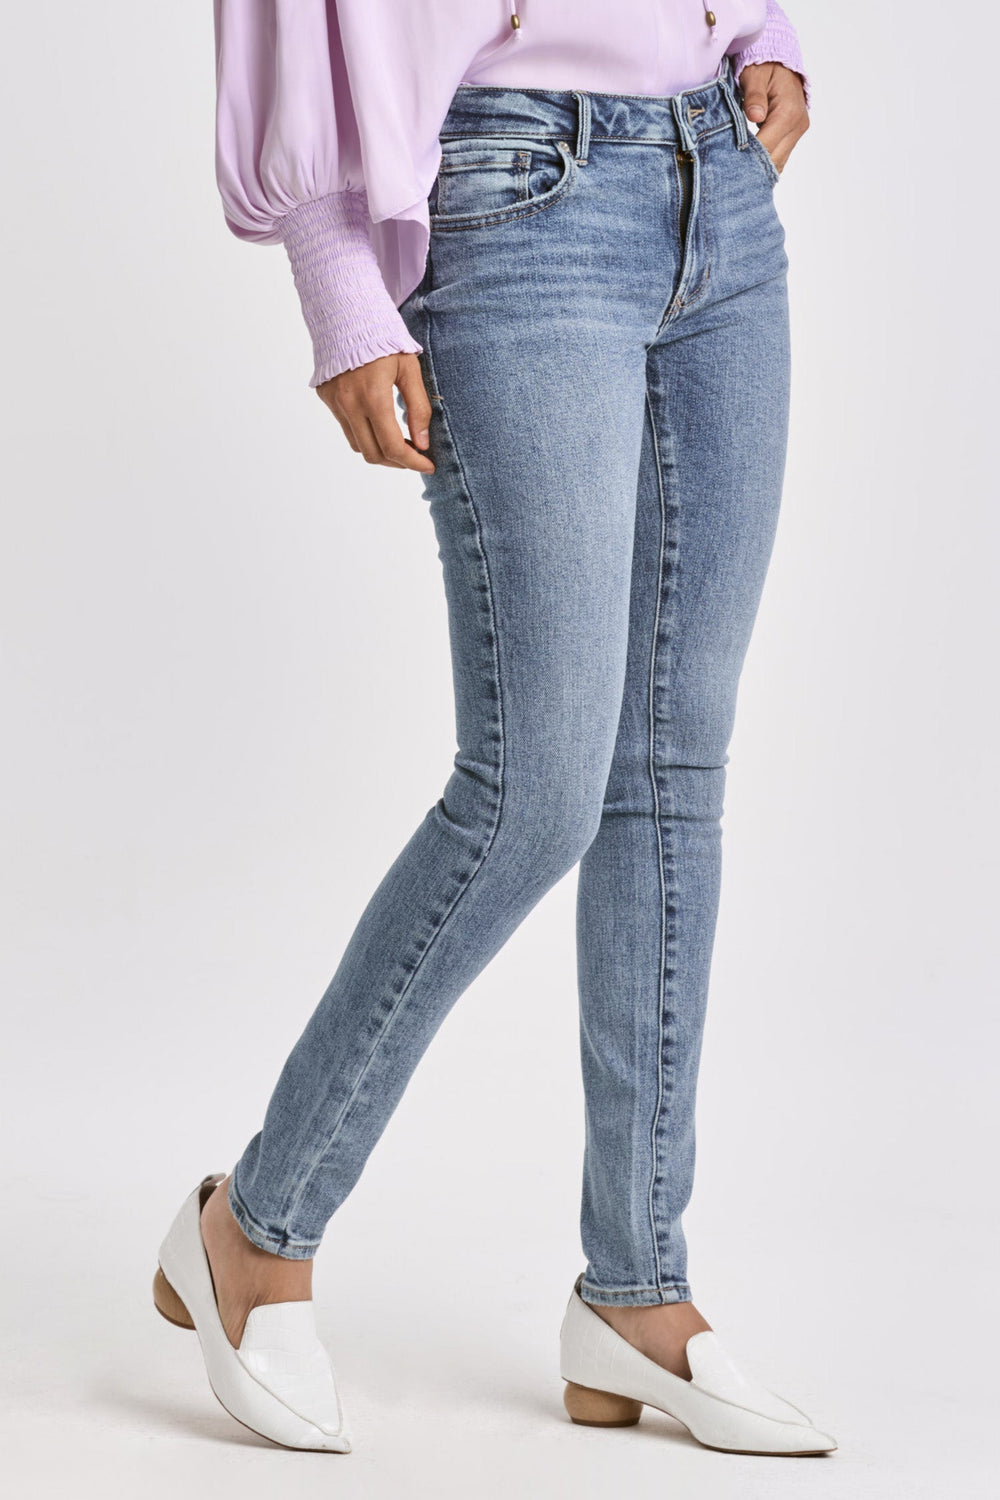 joyrich-mid-rise-cuffed-skinny-jeans-aralina